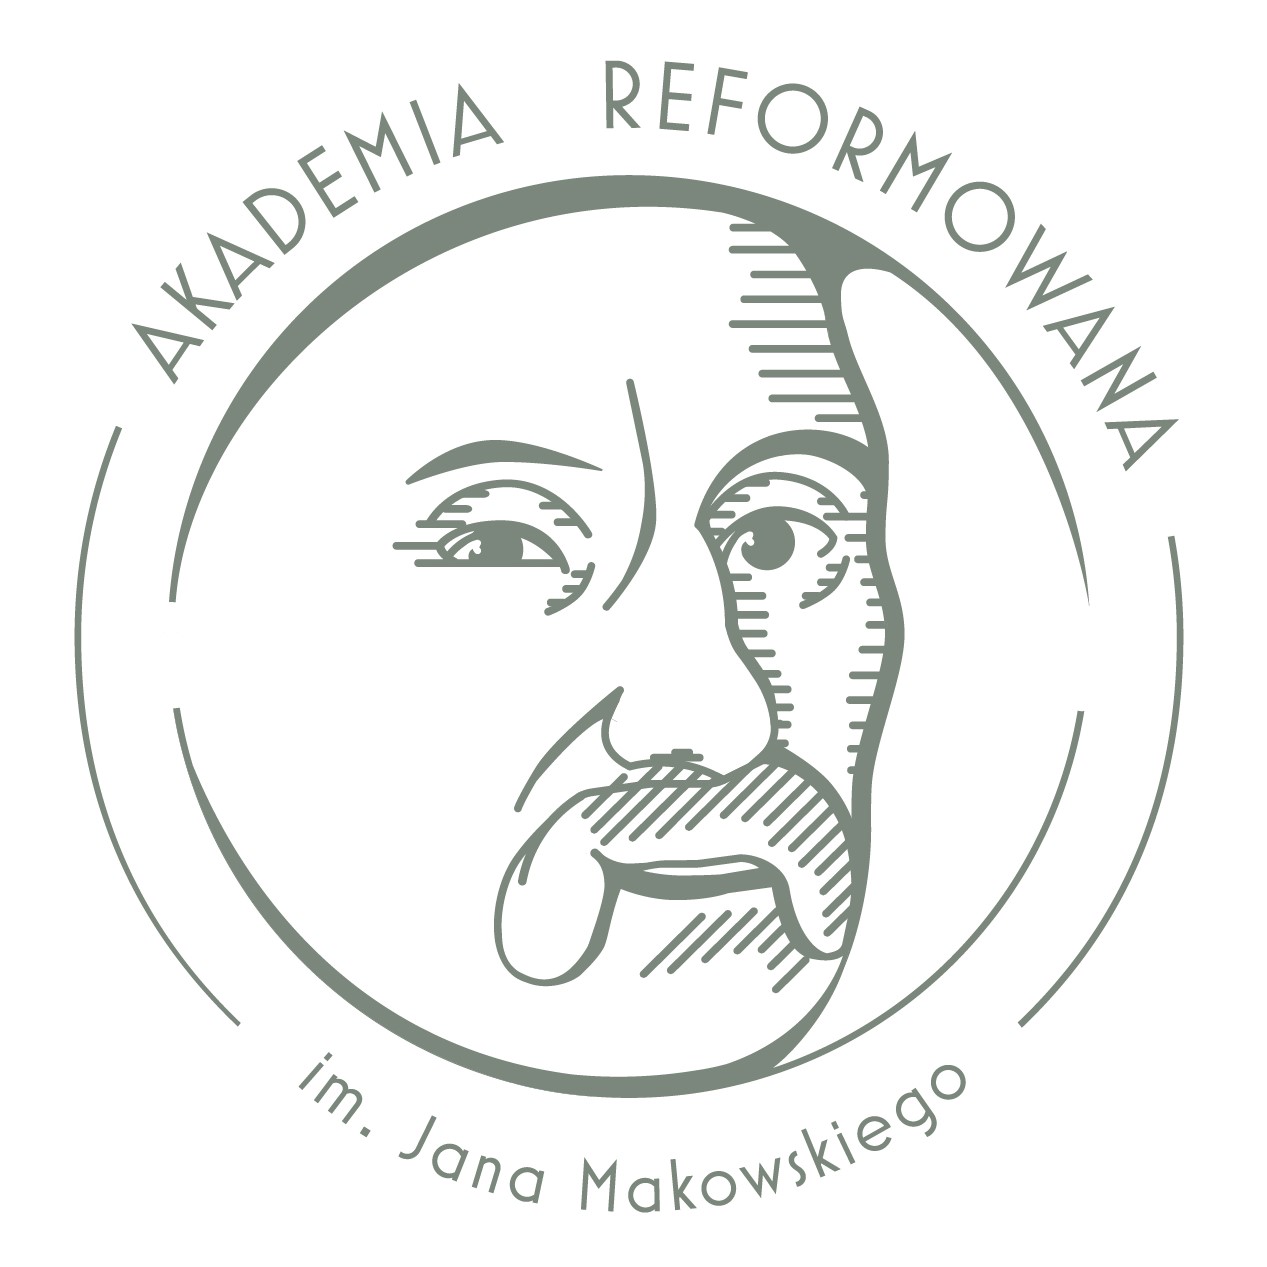 Makowski Academy of Reformed Theology